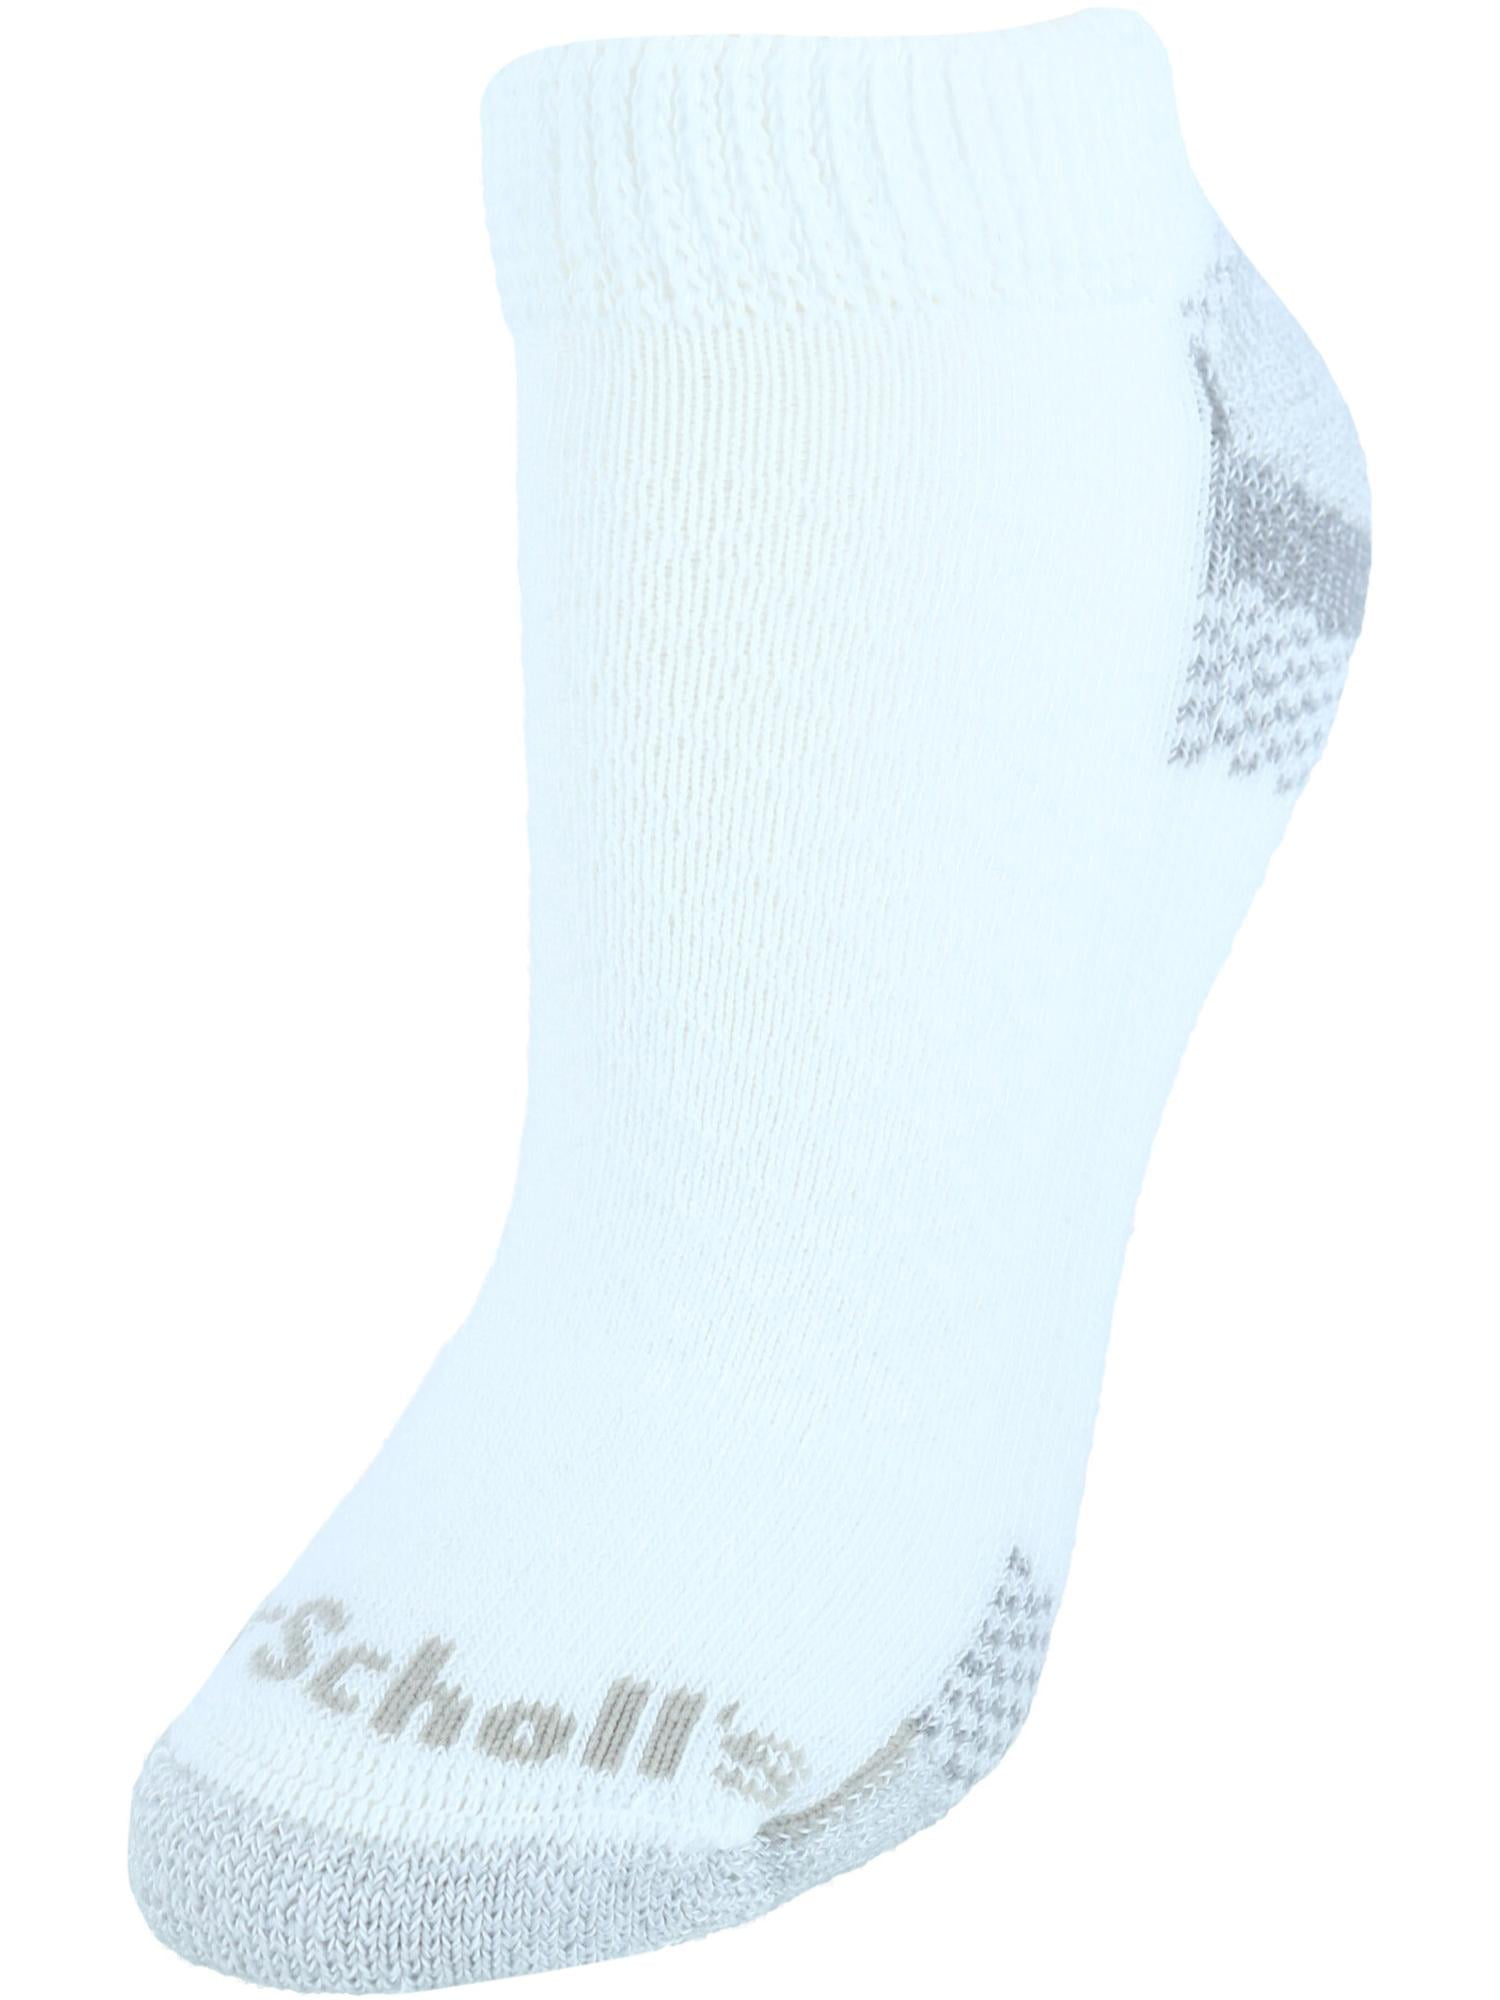 Dr Scholls ' Low Cut Advanced Relief Socks (2 Pair Pack) (Women) -  Walmart.com